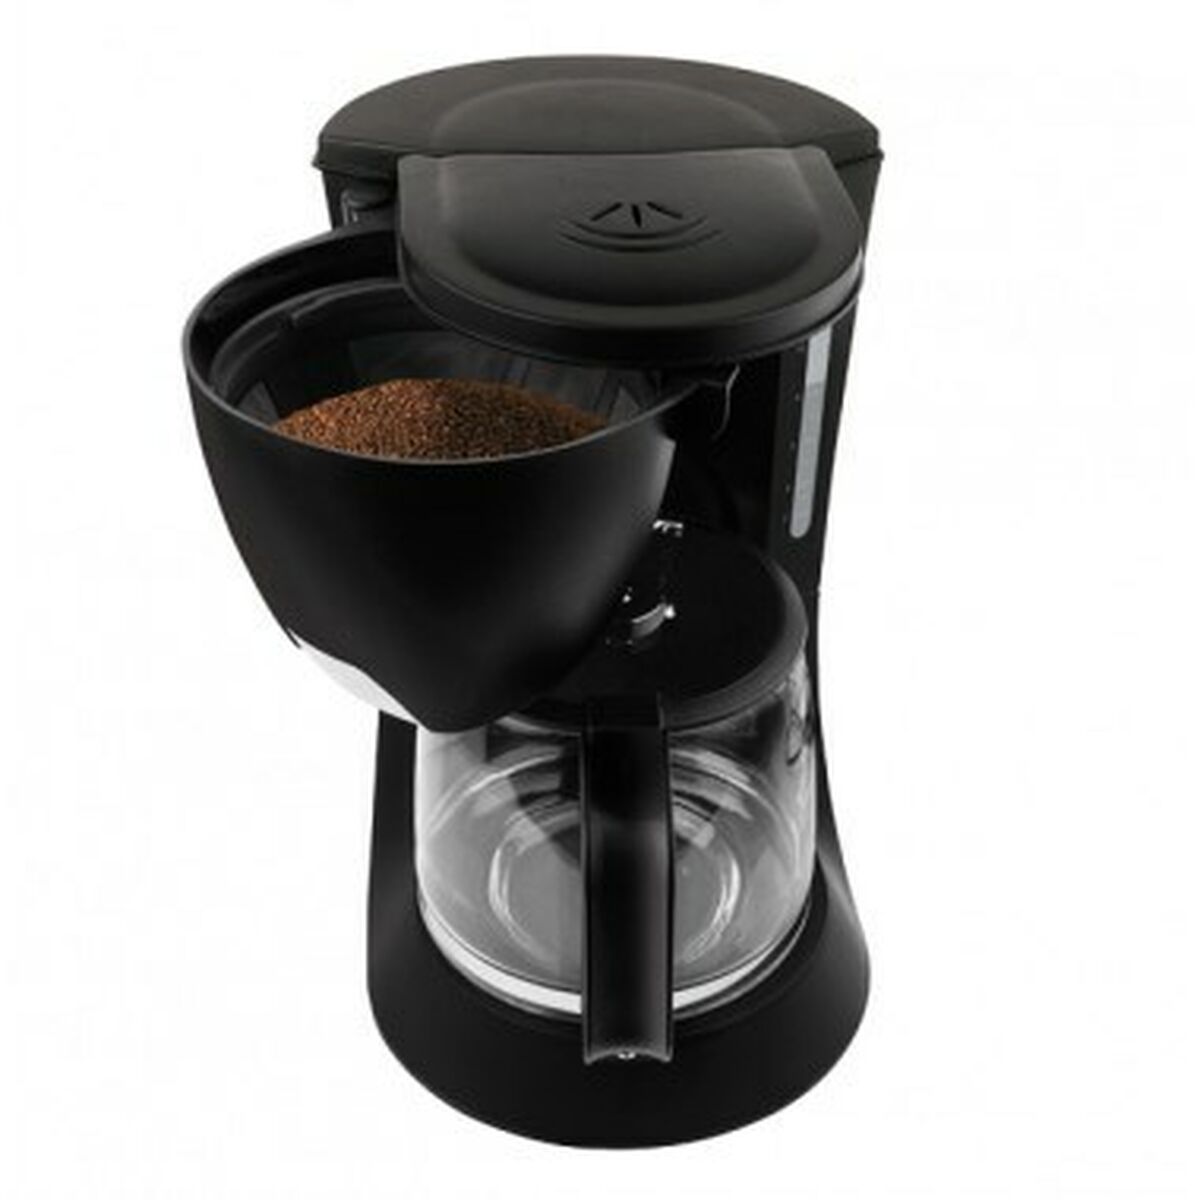 Filterkaffeemaschine Taurus 920614000 Schwarz 600 W 600 ml - CA International  